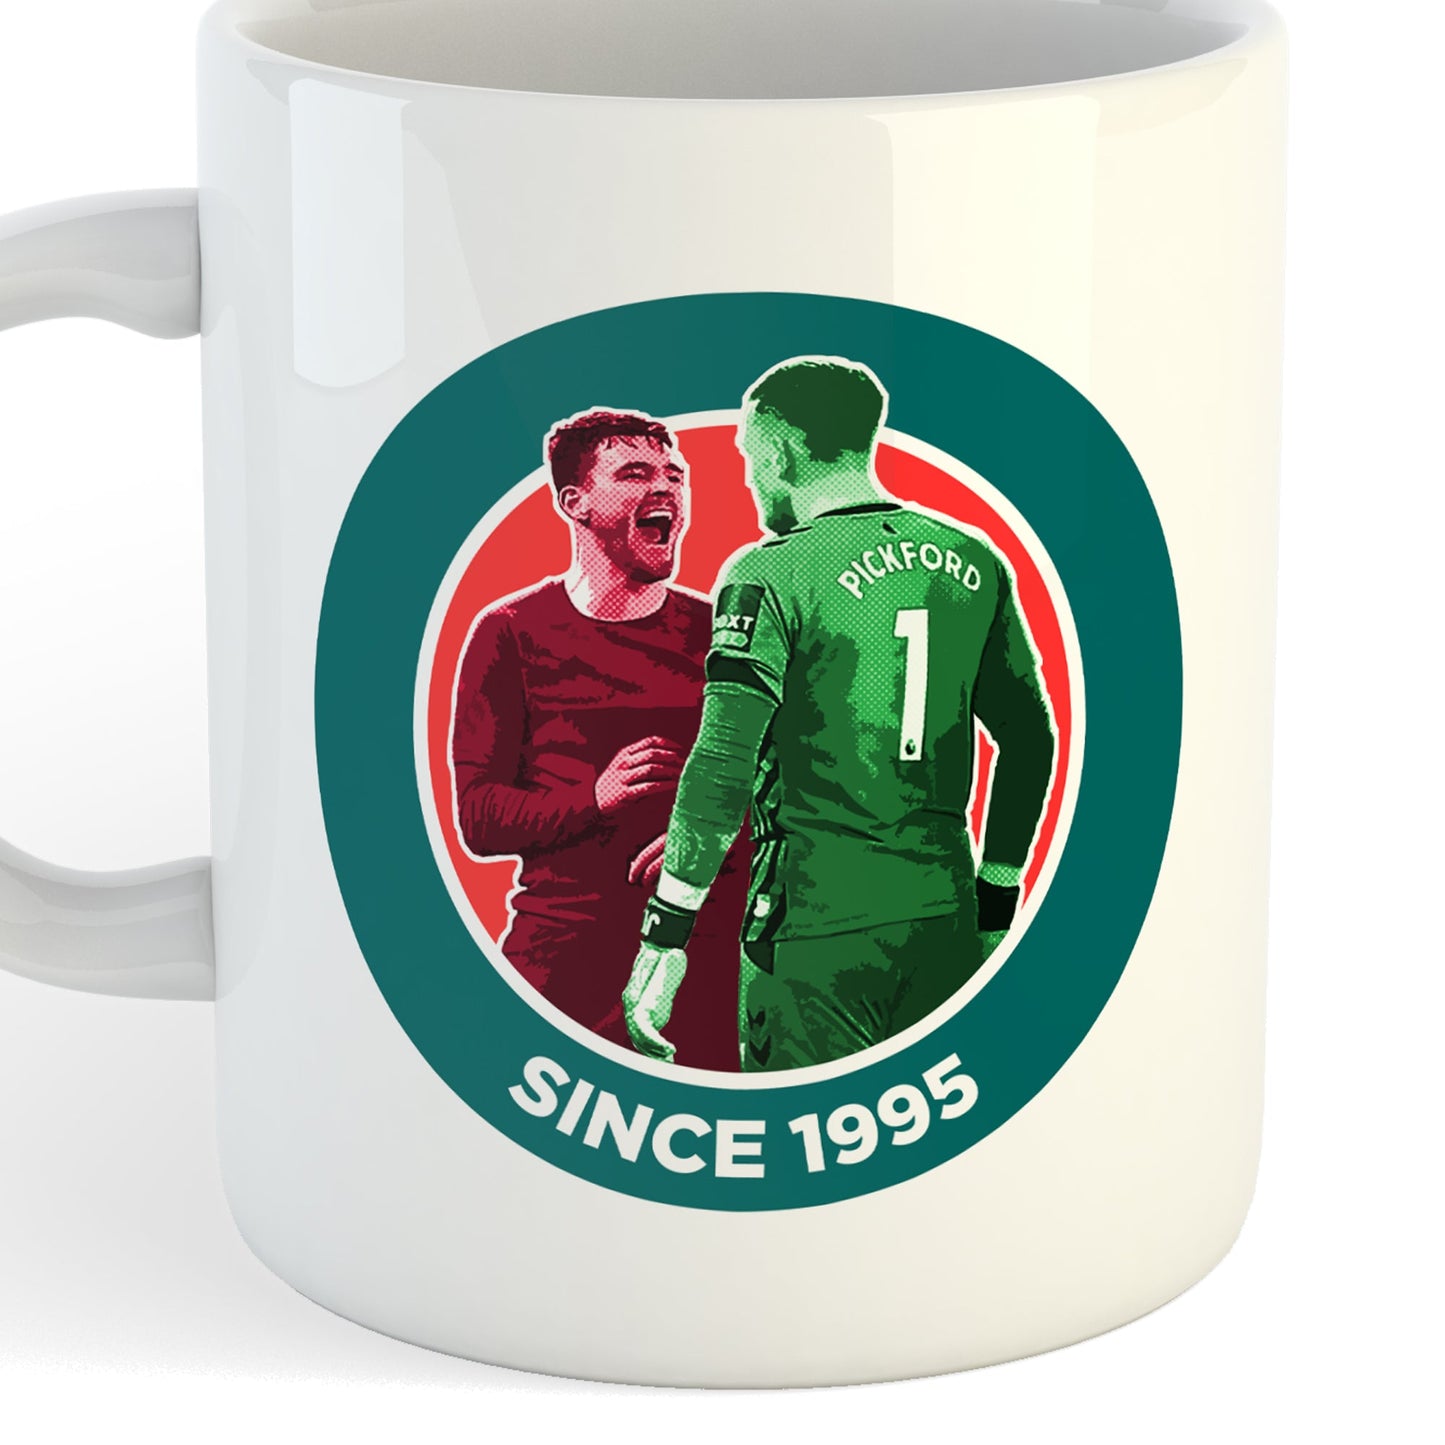 Since 1995 Mug